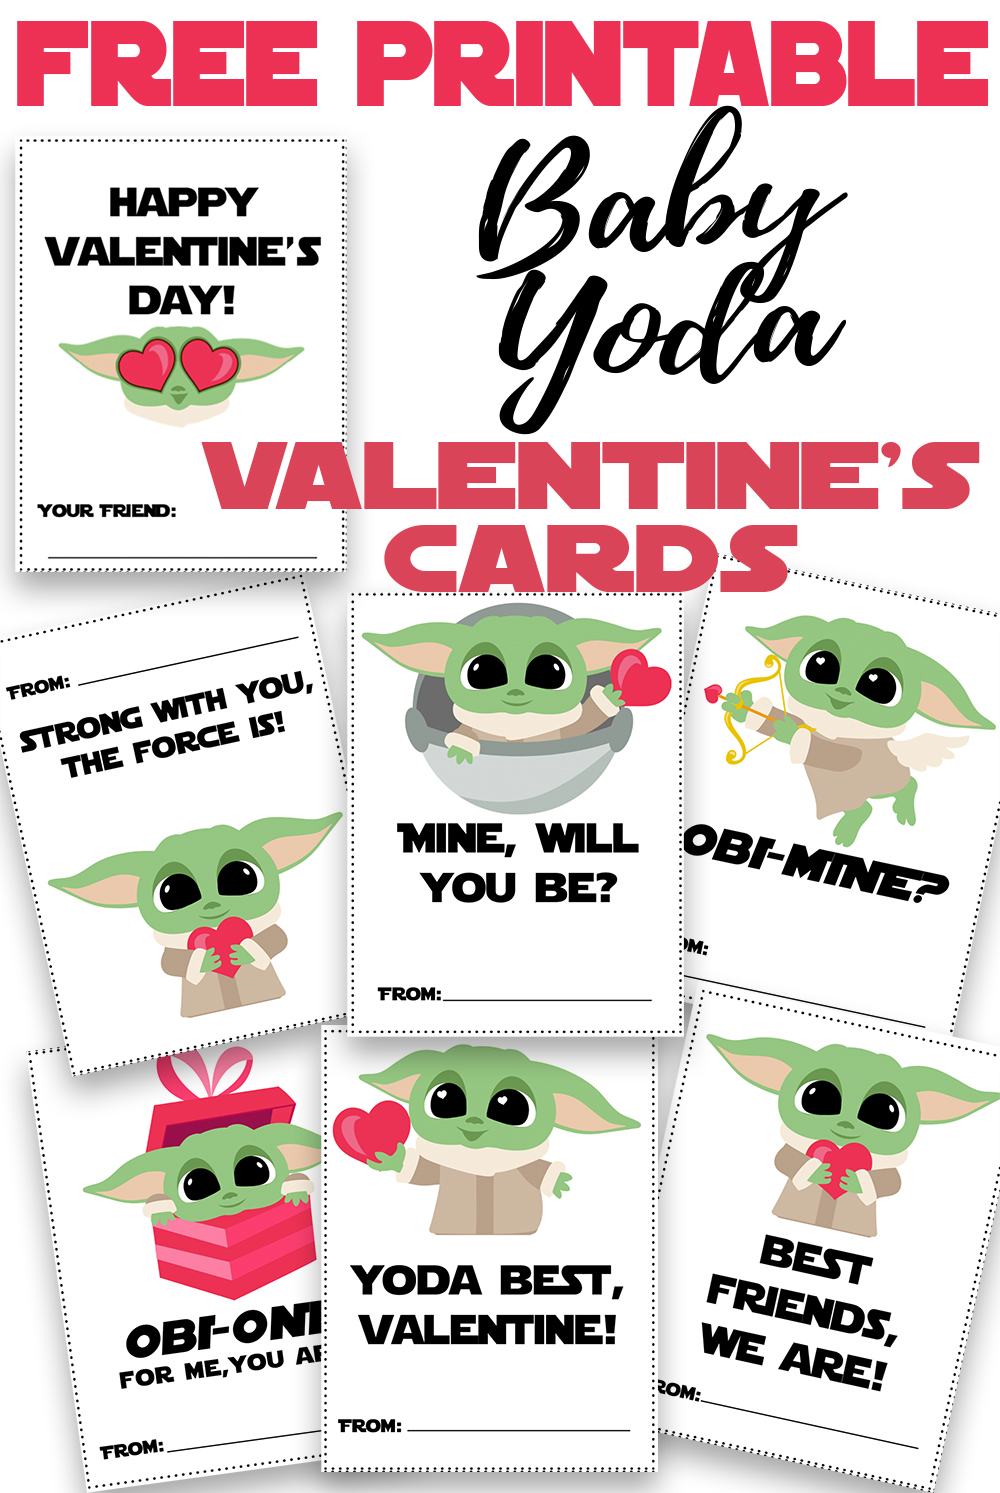 baby-yoda-valentine-s-cards-free-printables-beth-bryan